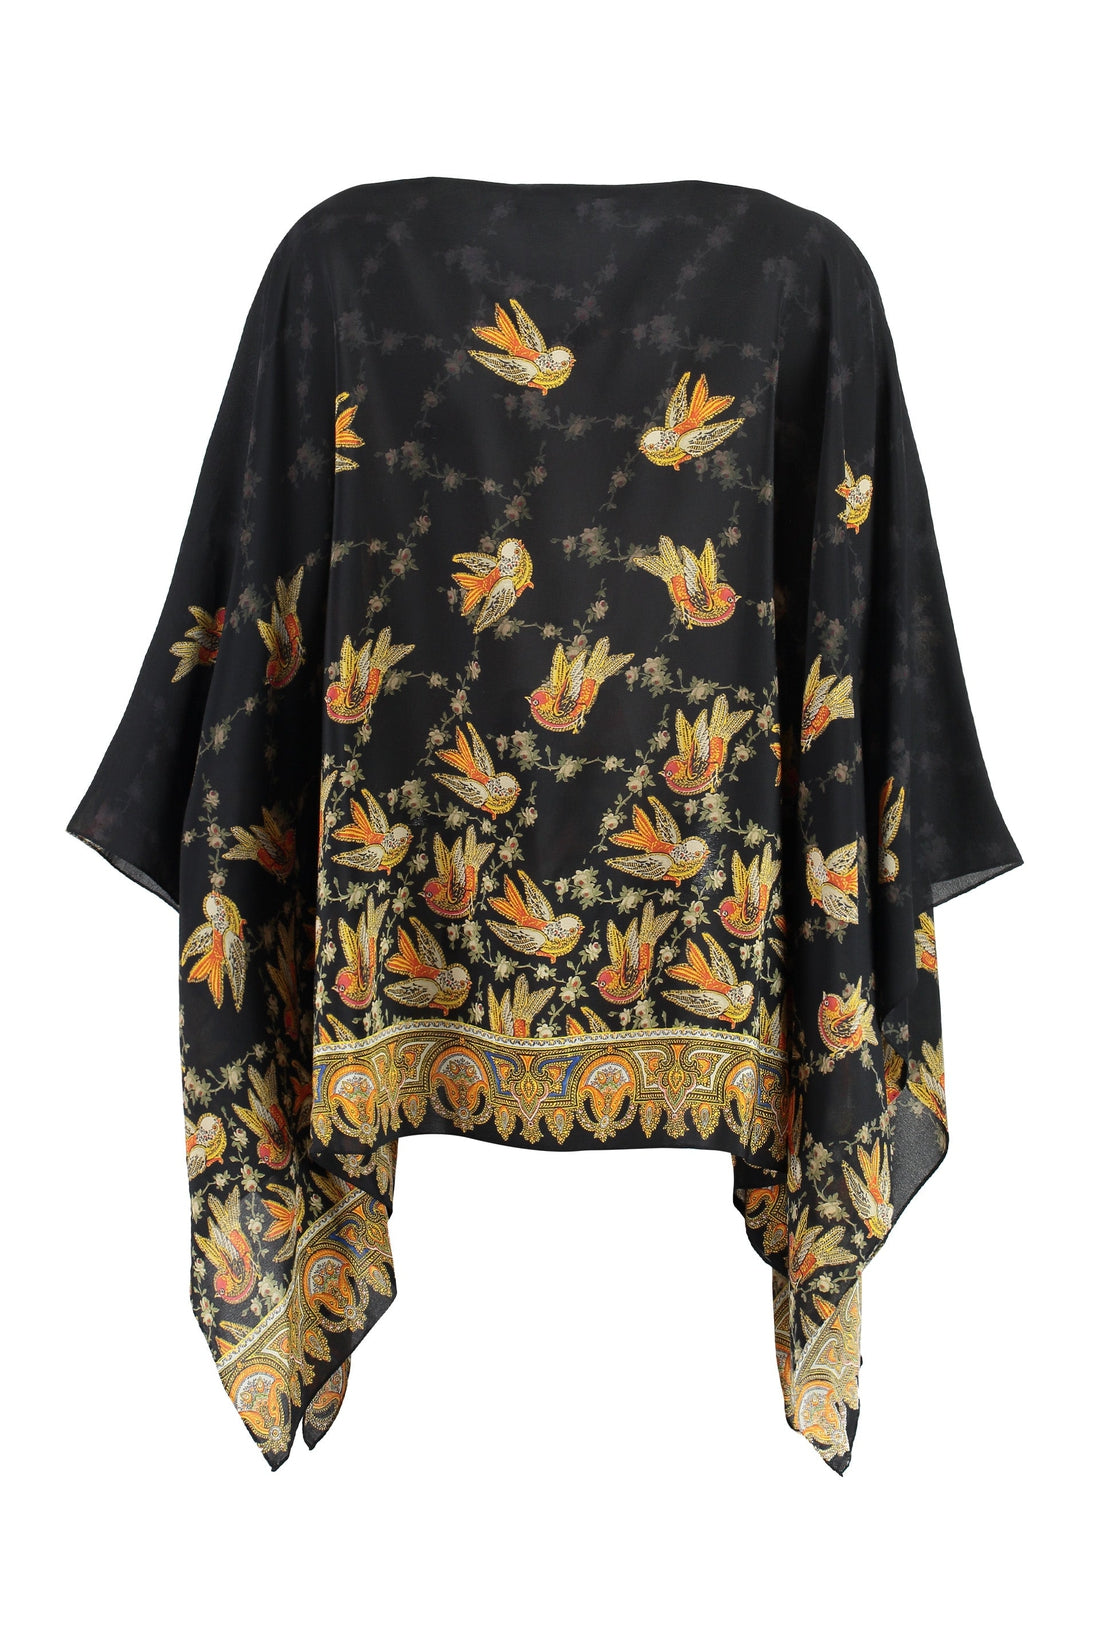 Etro-OUTLET-SALE-Printed silk blouse-ARCHIVIST